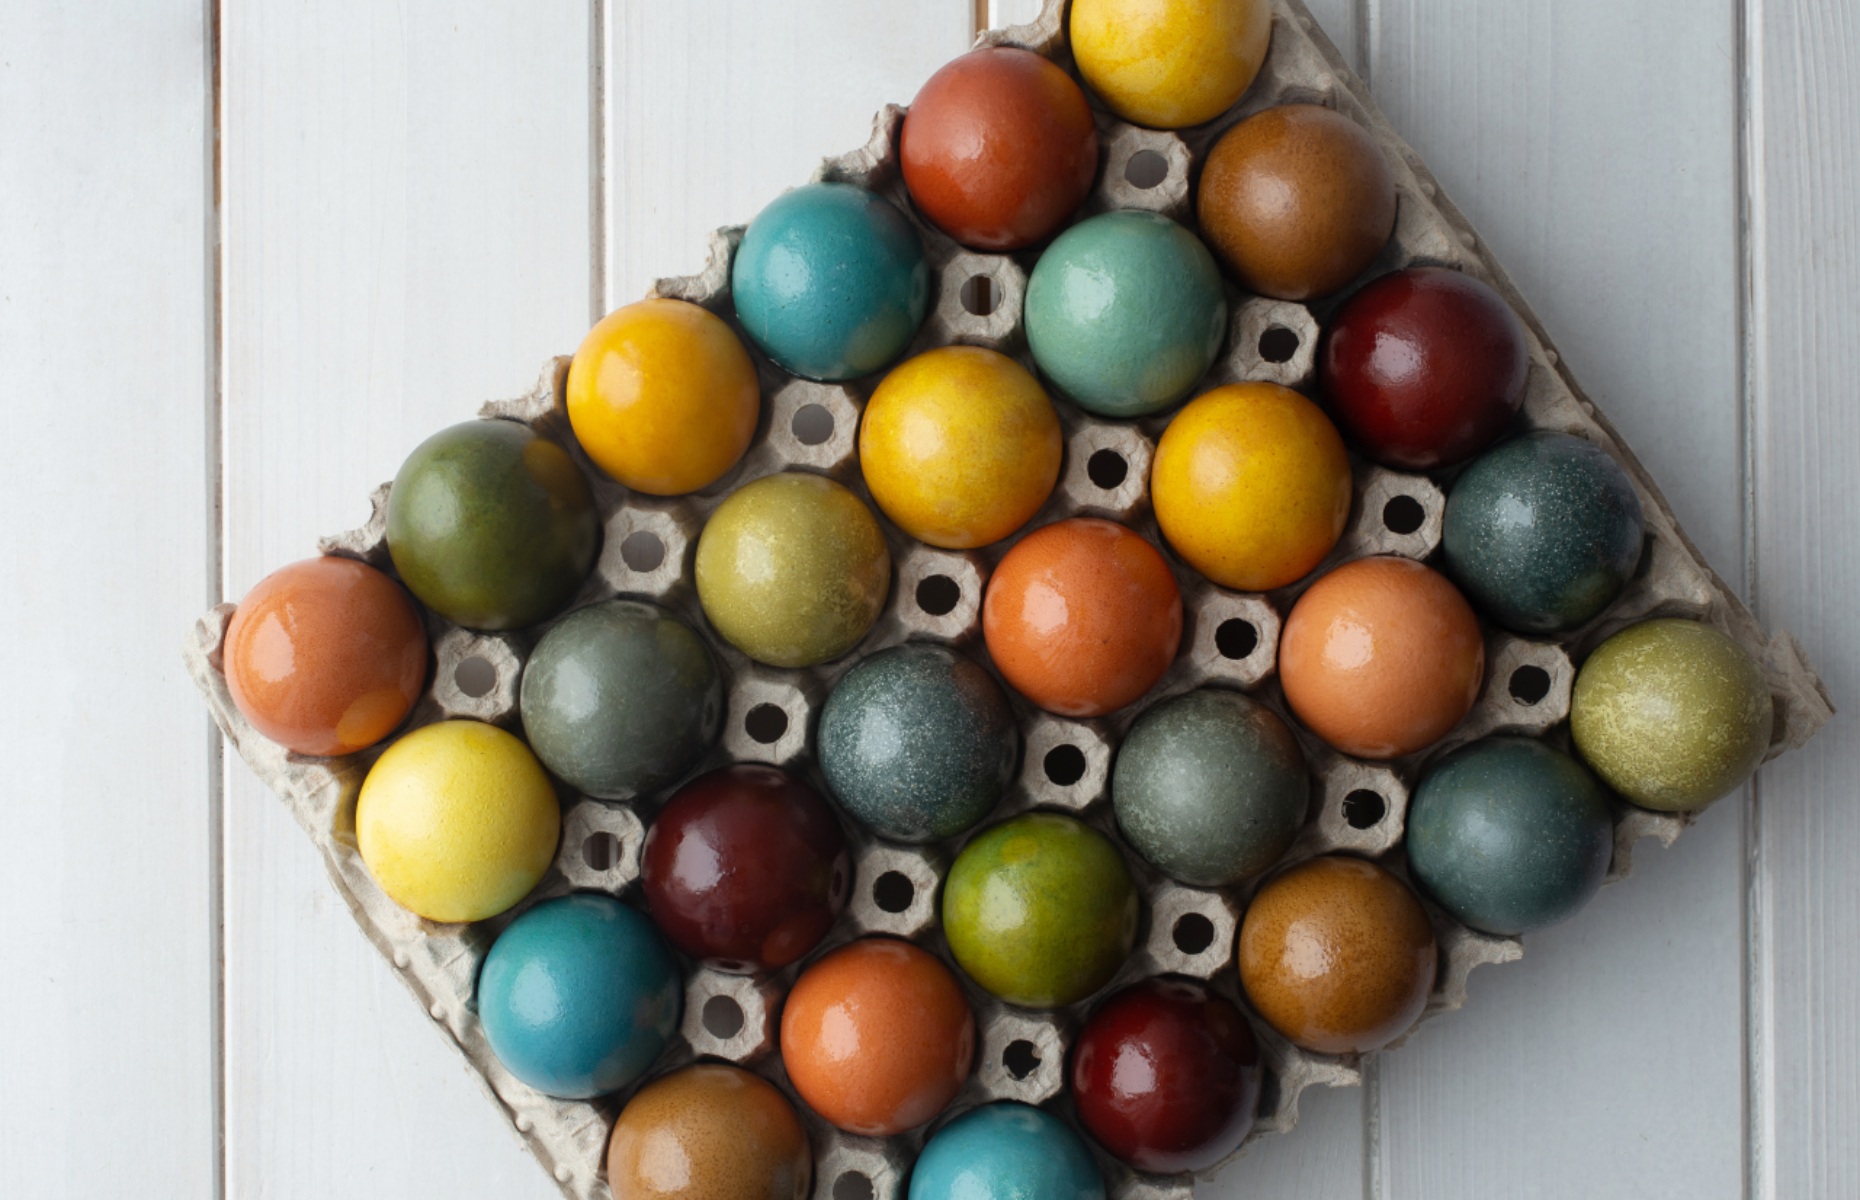 Dyed eggs (Image: Karina Bostanika/Shutterstock)